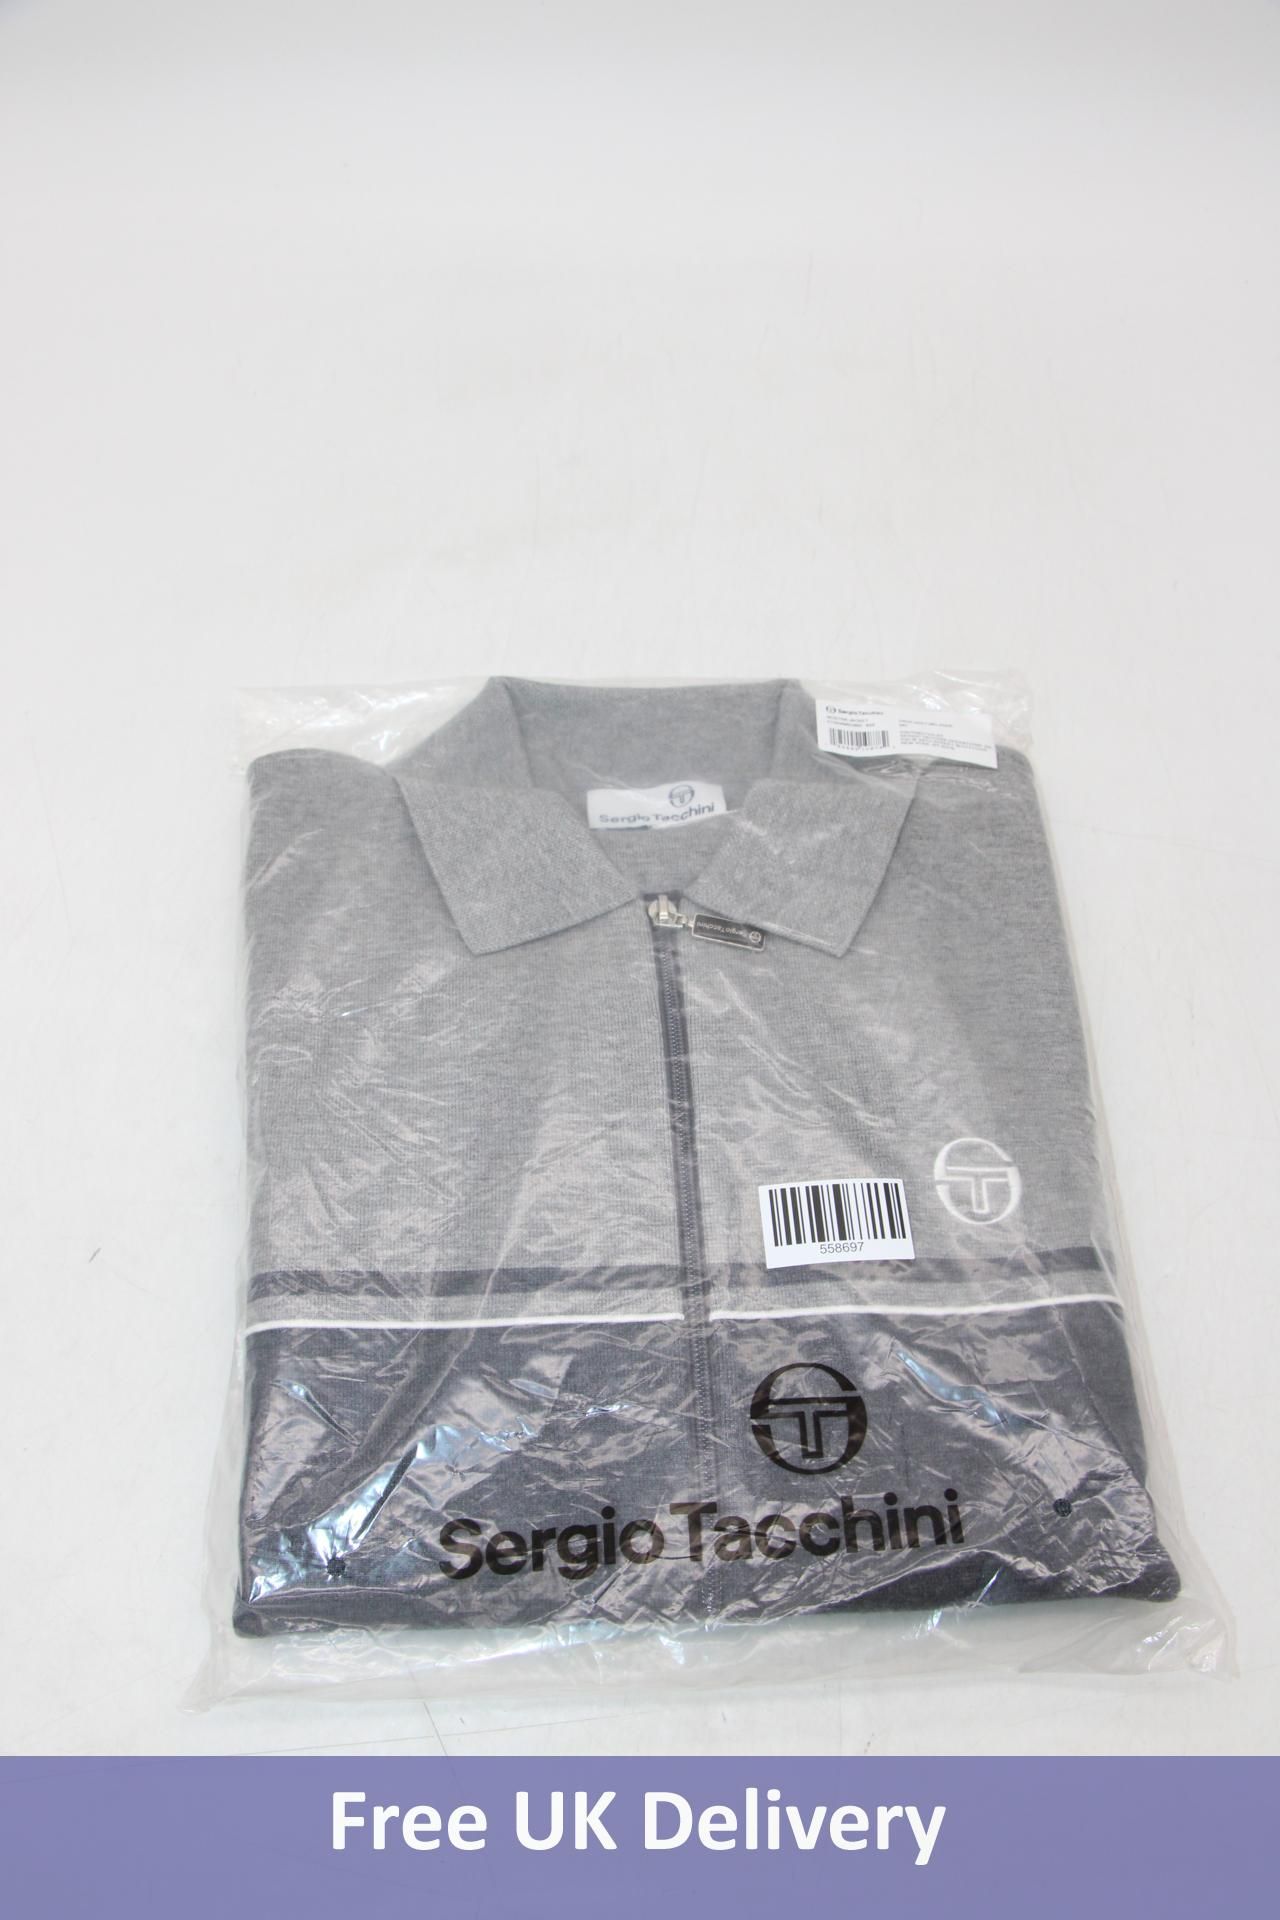 Sergio Tacchini Nostra Jacket, Dark Grey Melange, Size L